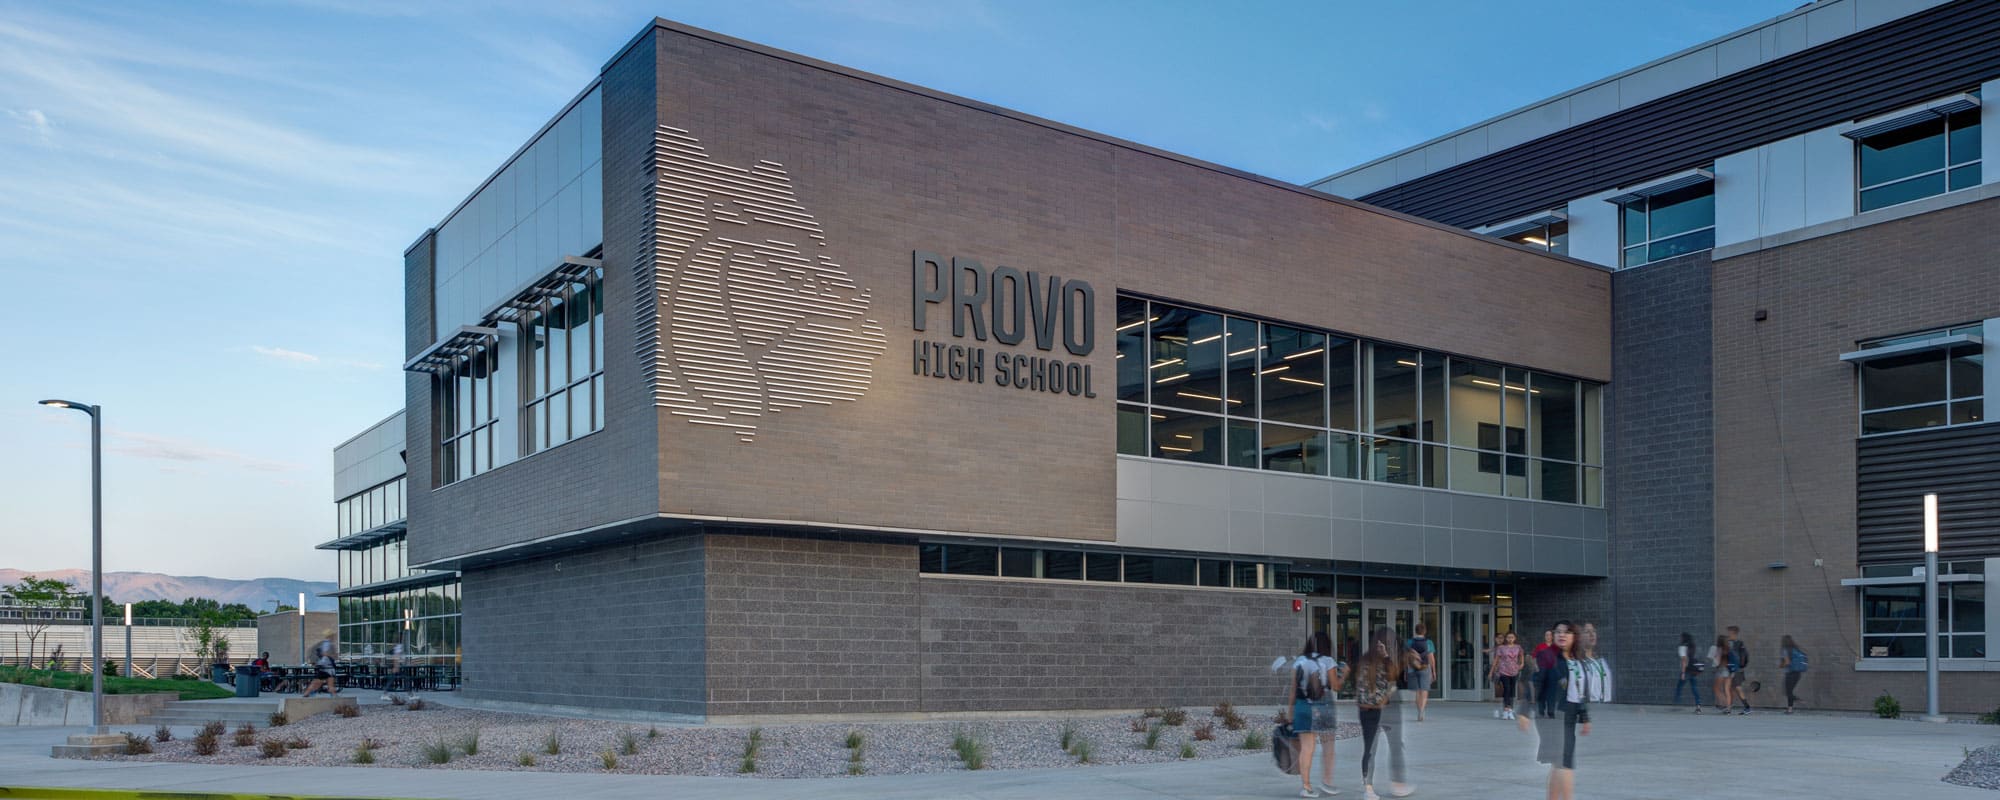 Provo High School